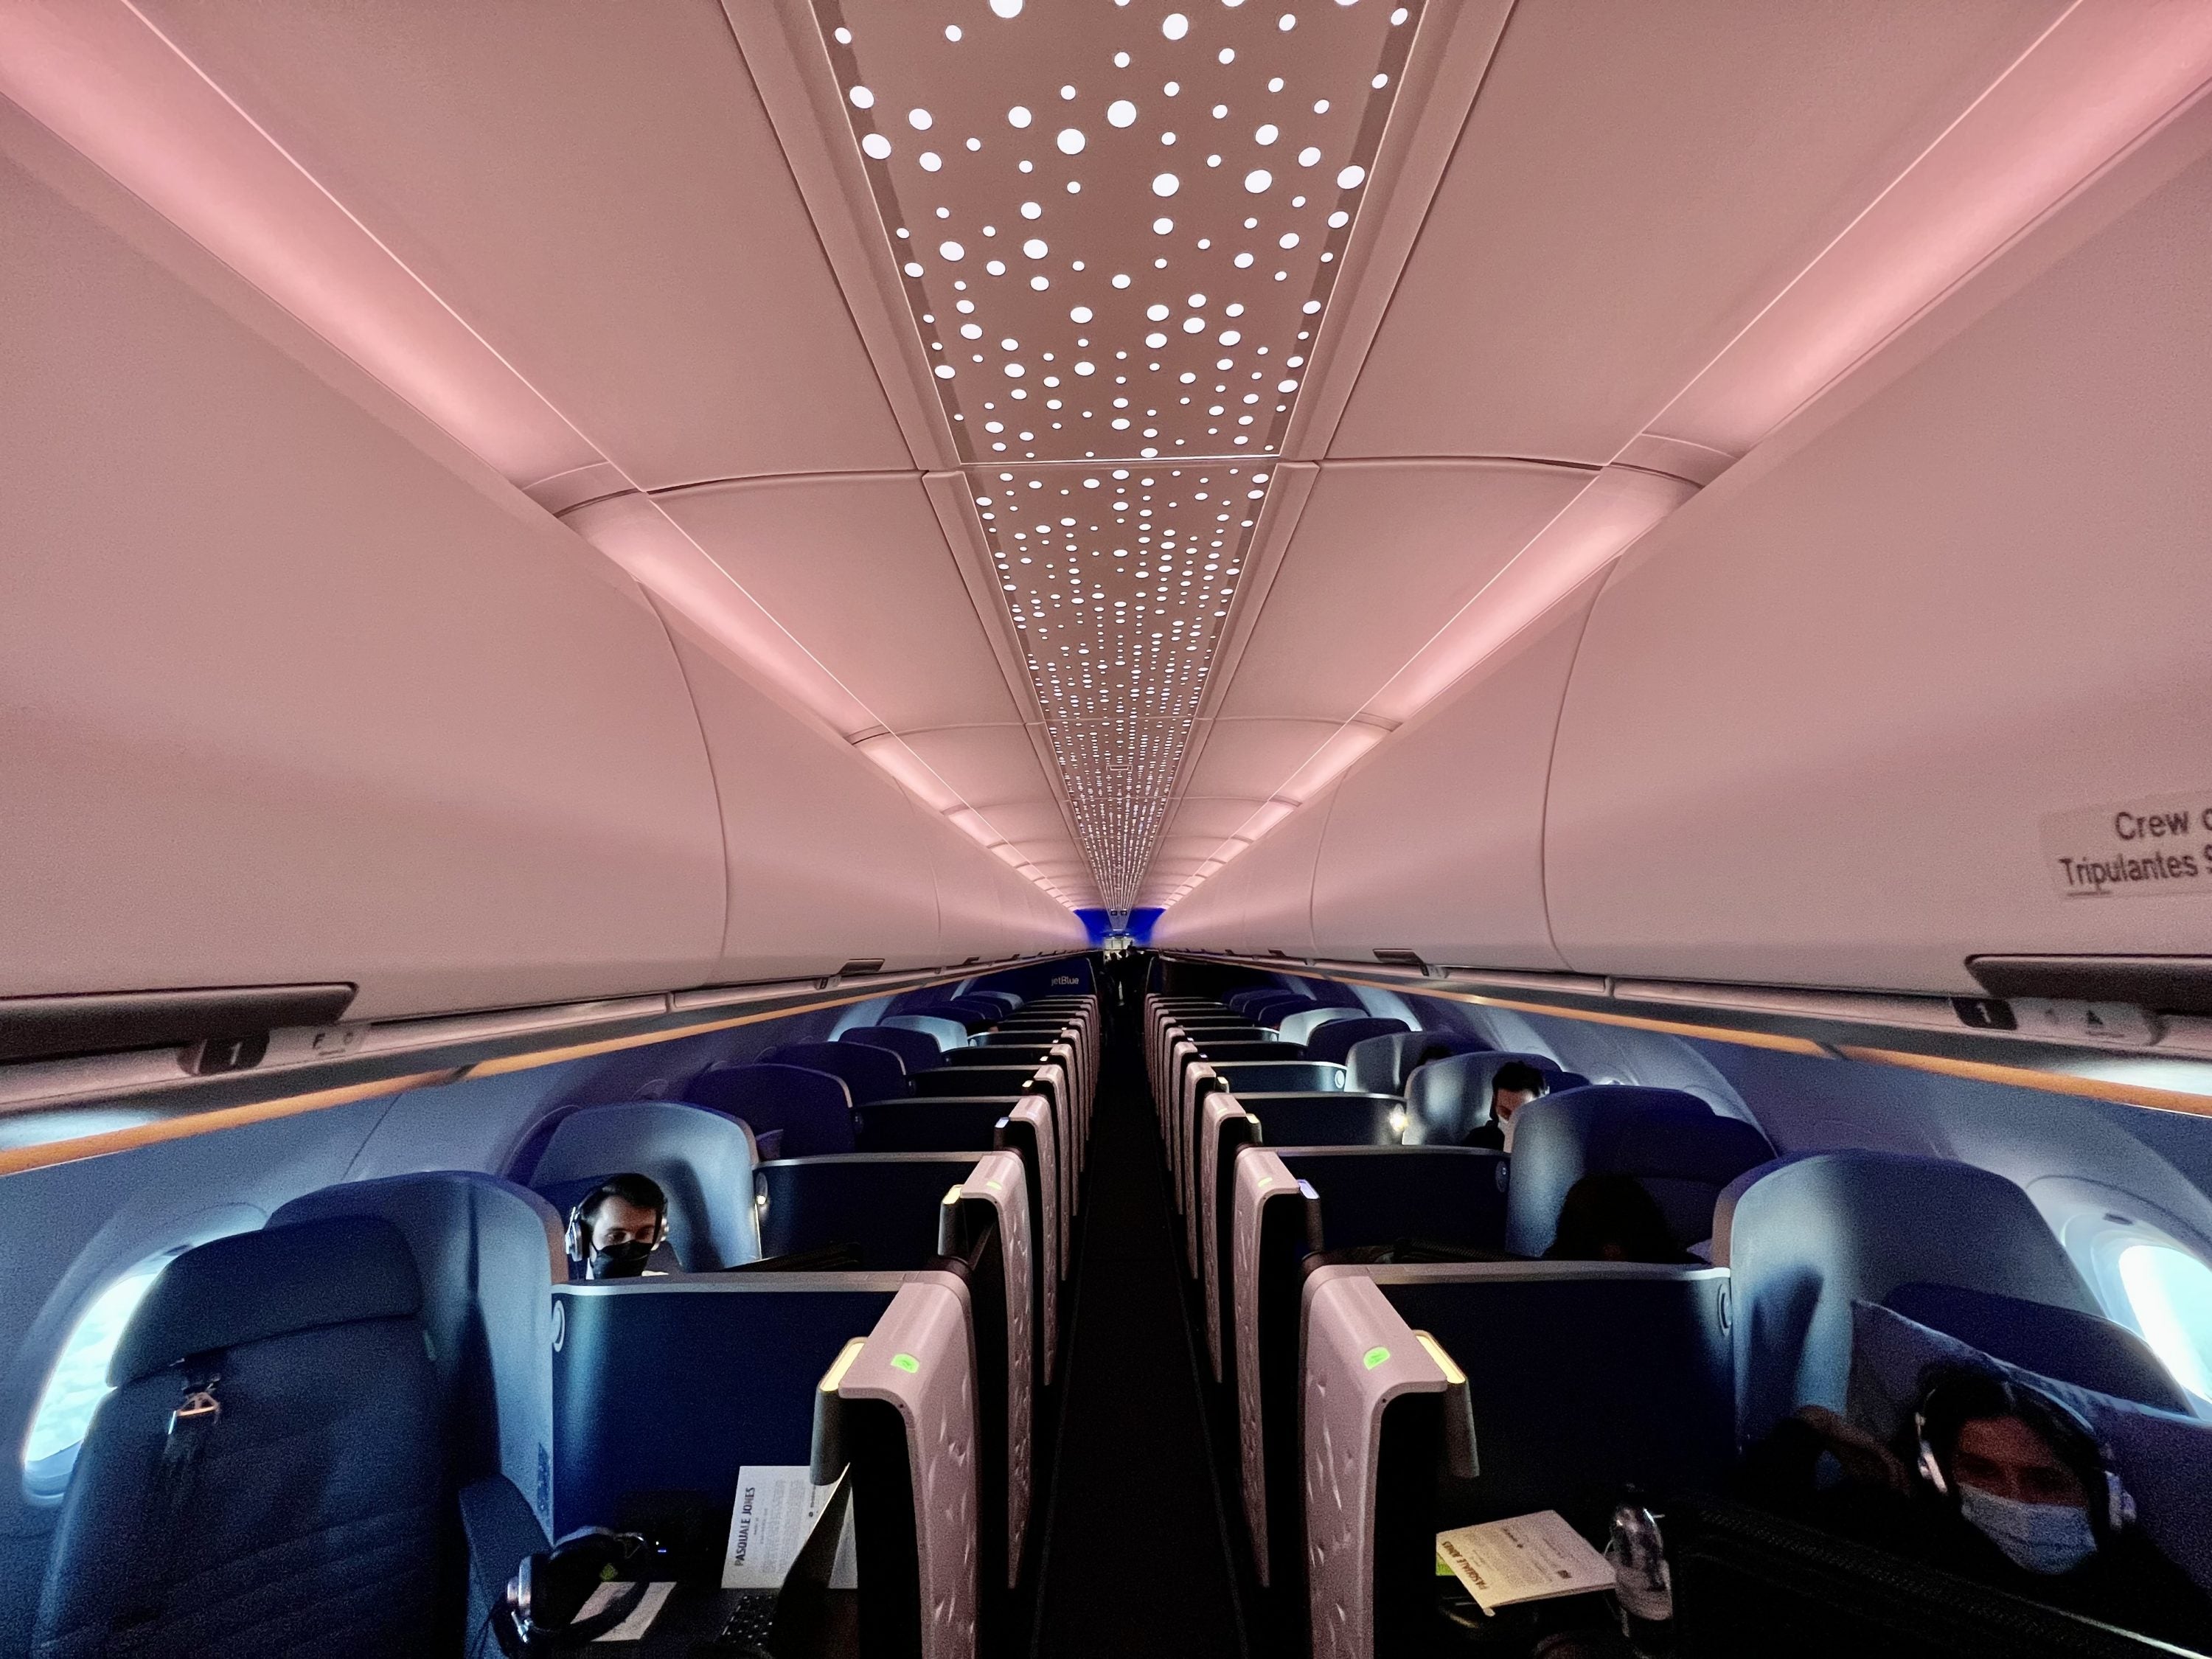 JetBlue Mint A321LR Mint cabin ceiling